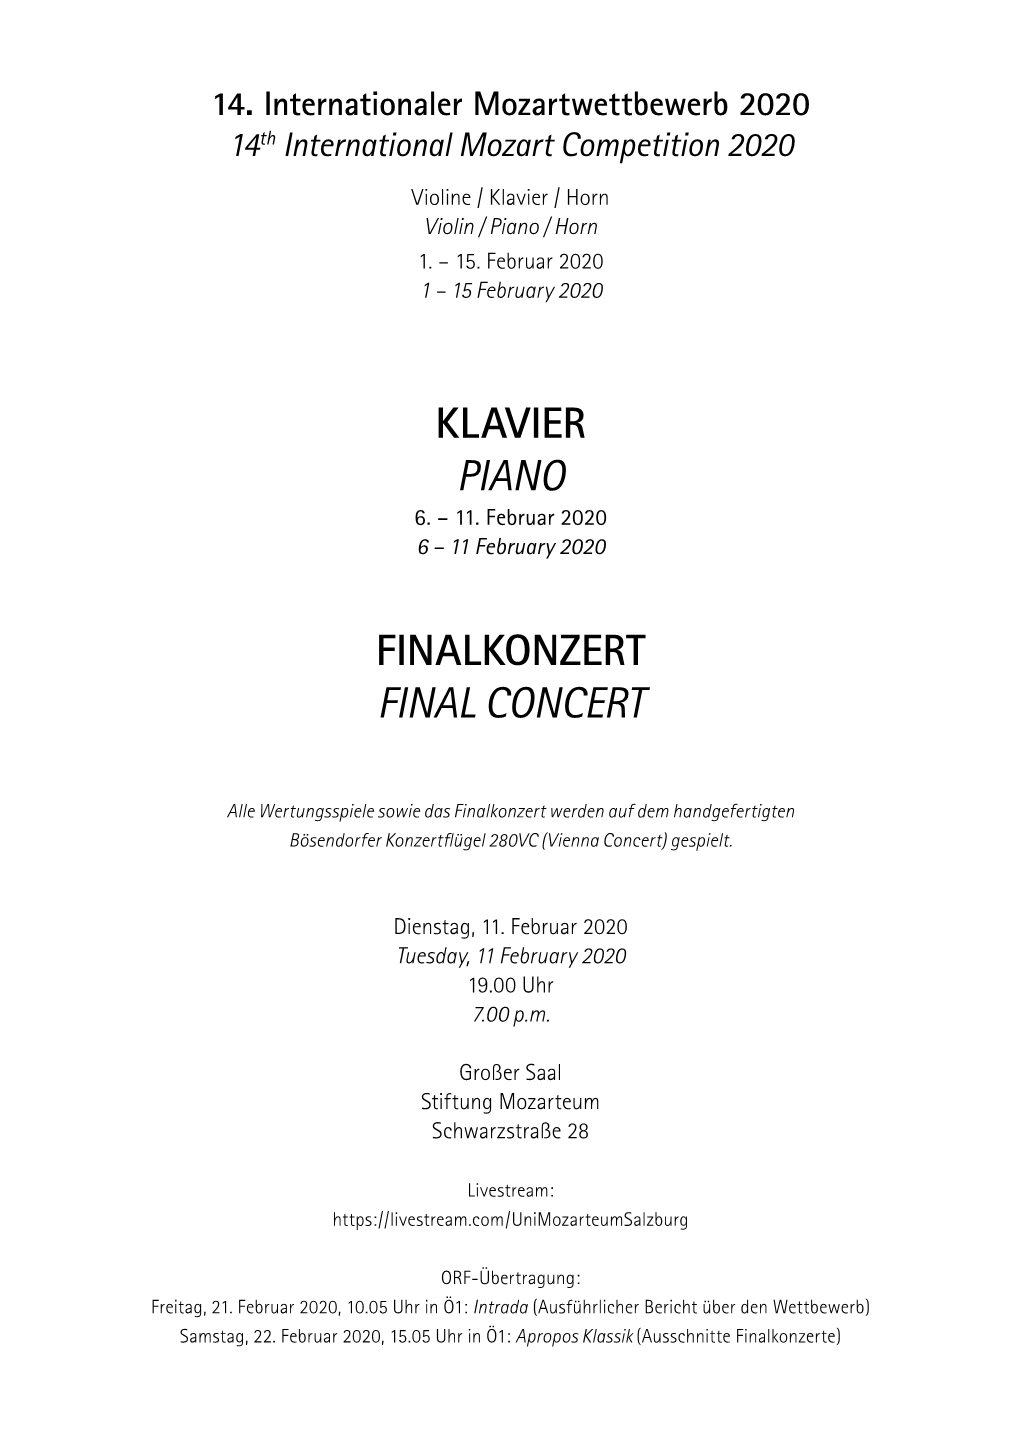 Klavier Piano Finalkonzert Final Concert